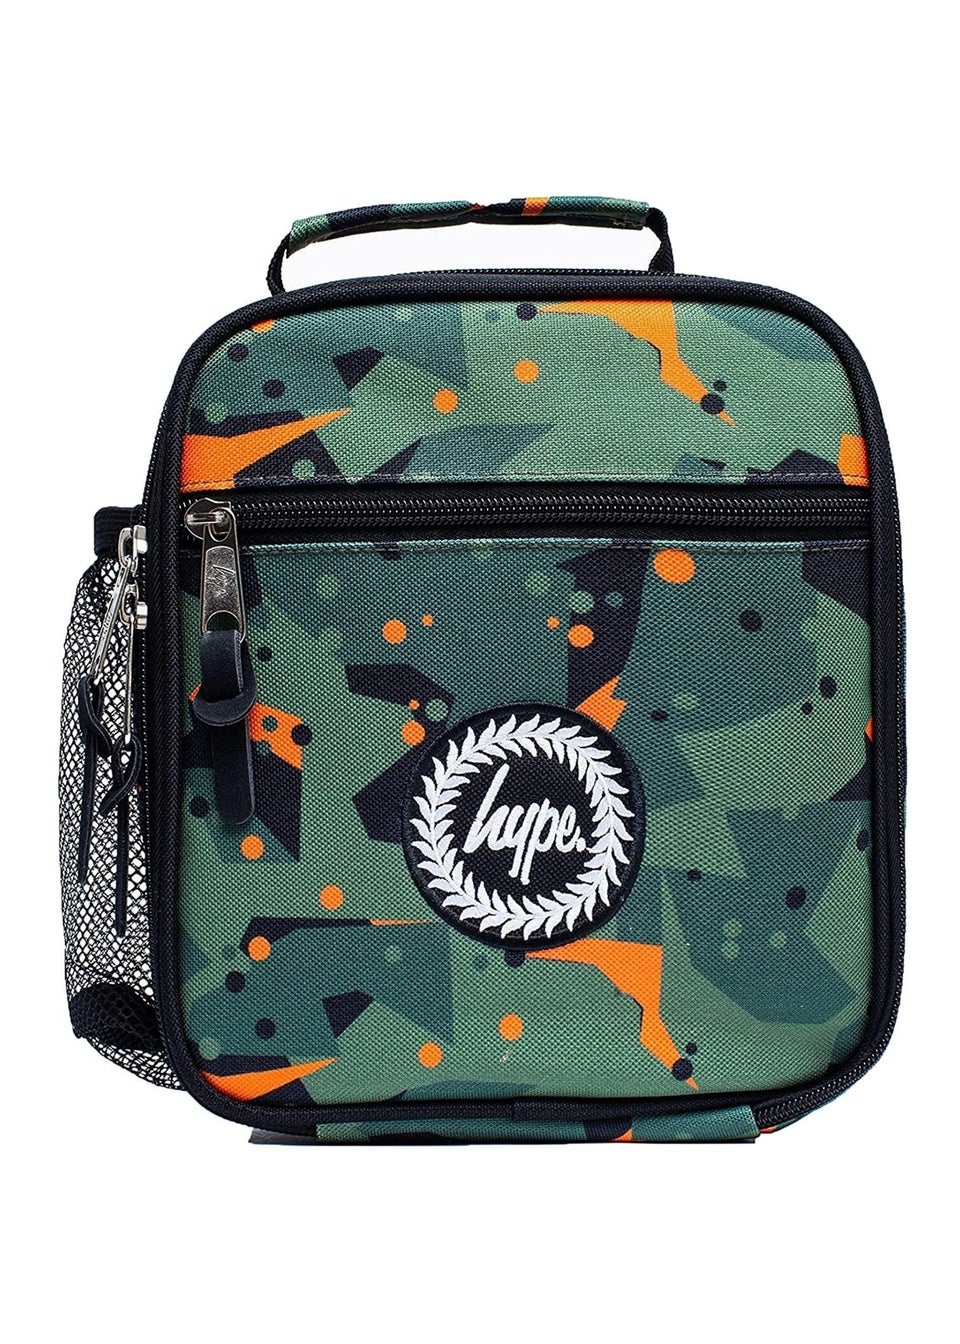 Hype Green Geo Camo Lunch Bag